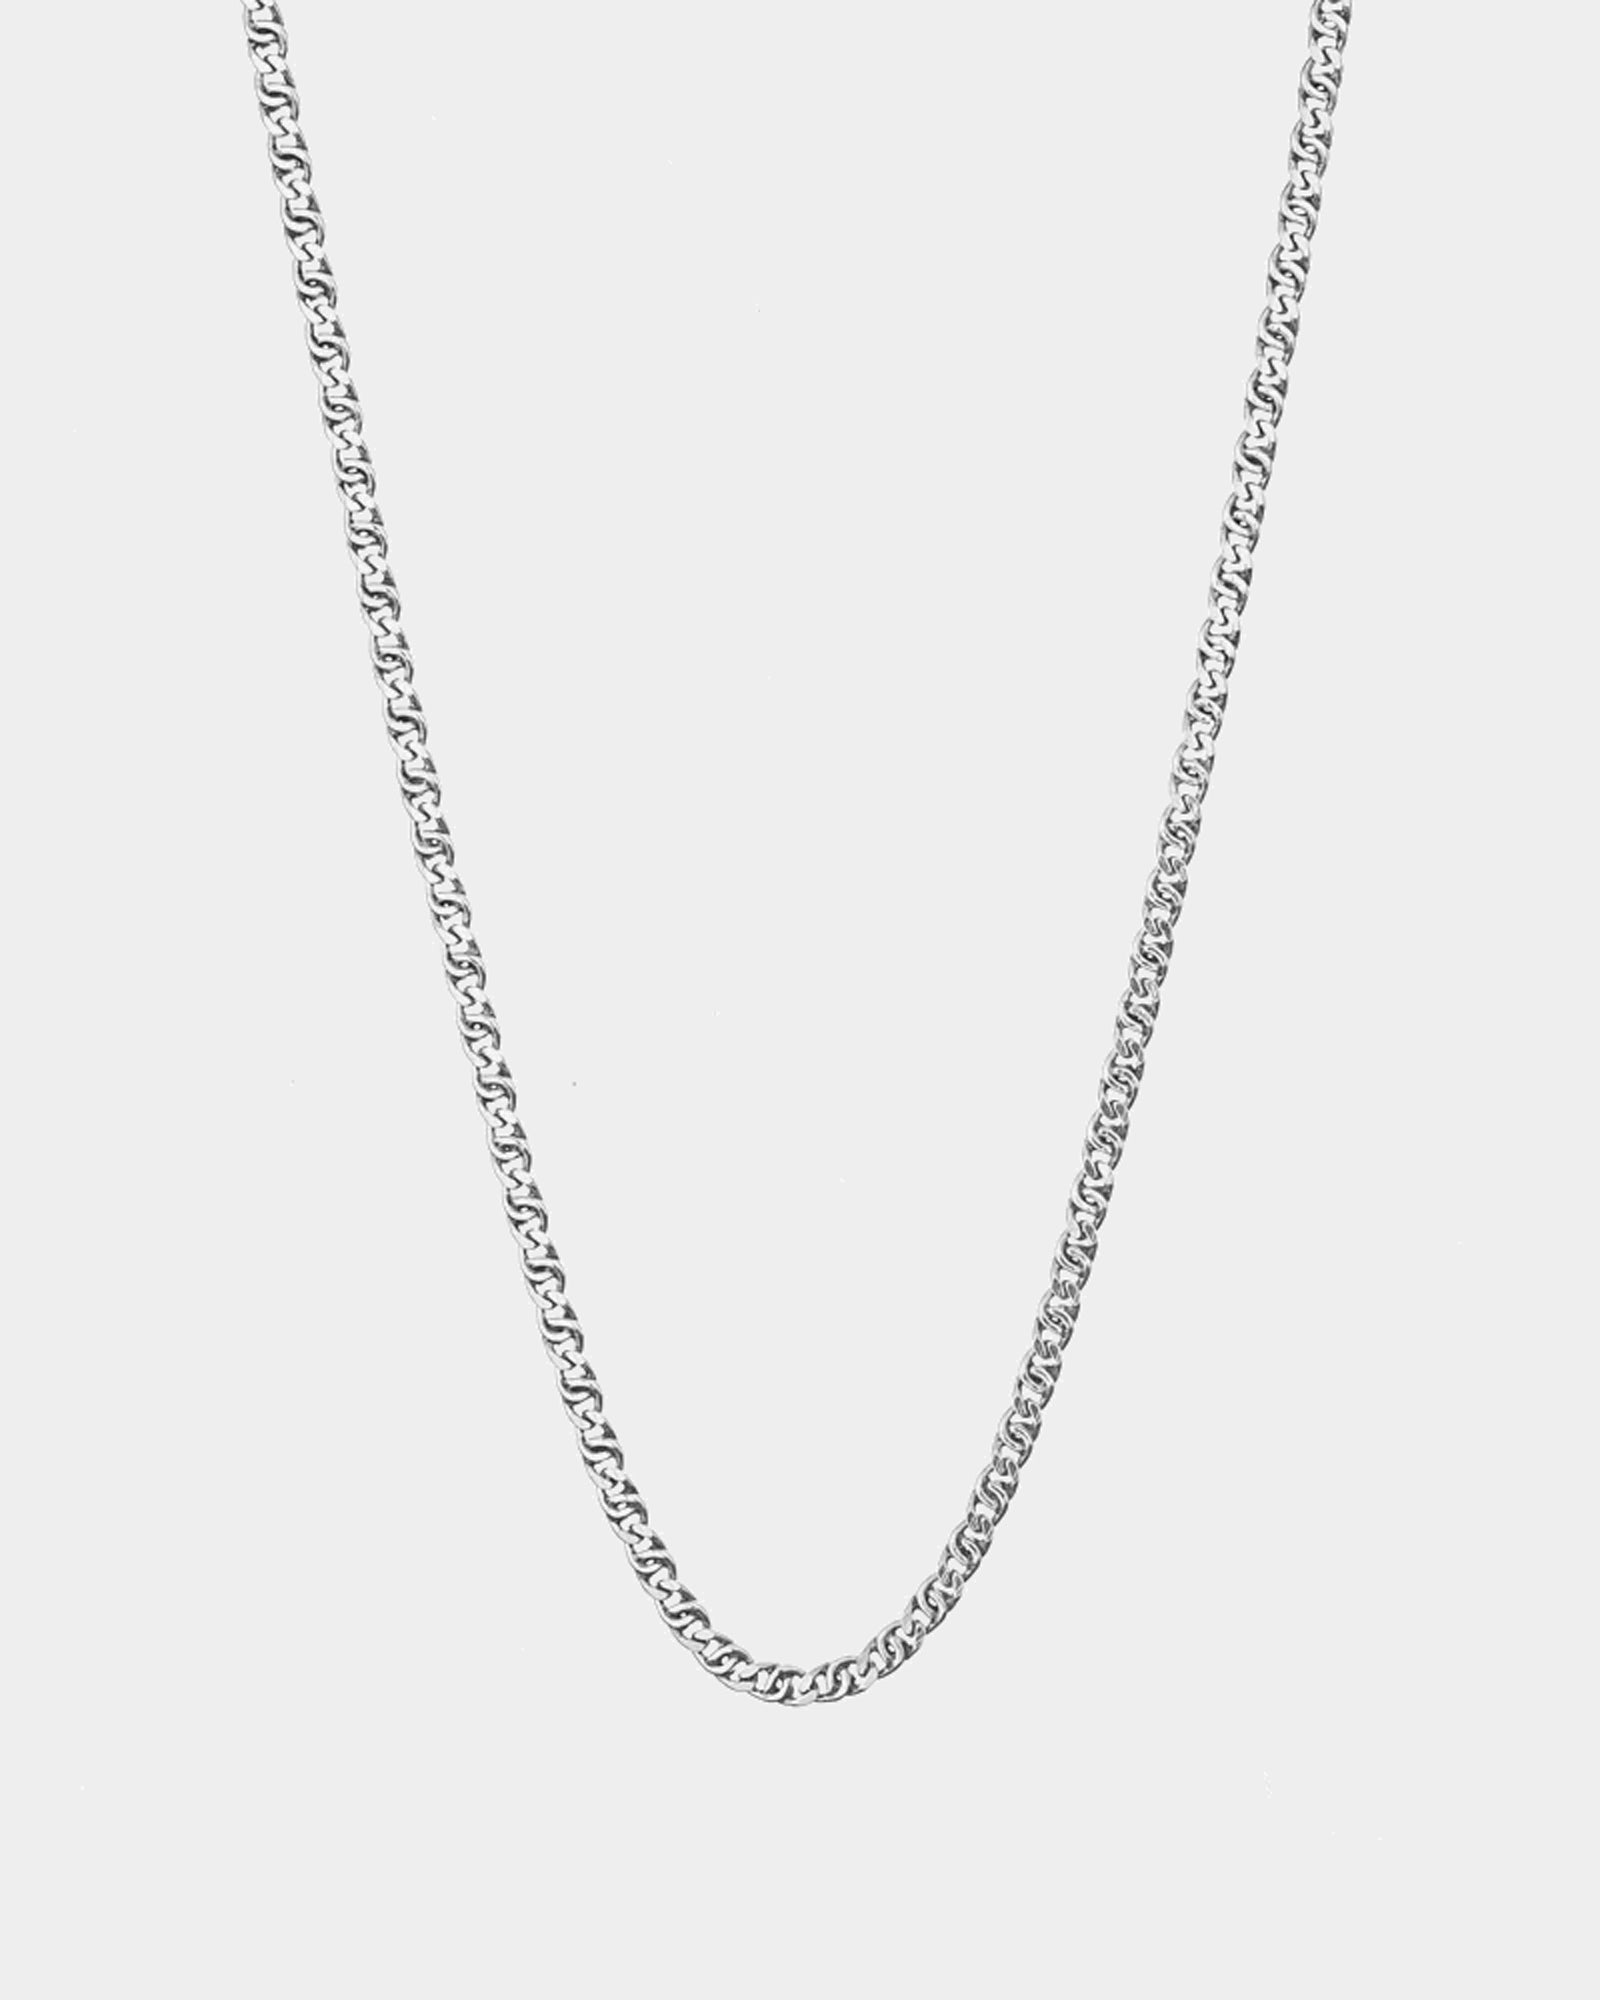 925 Sterling Silver Necklace 'Cuban Chain' - Online Unisex Necklaces - Dicci